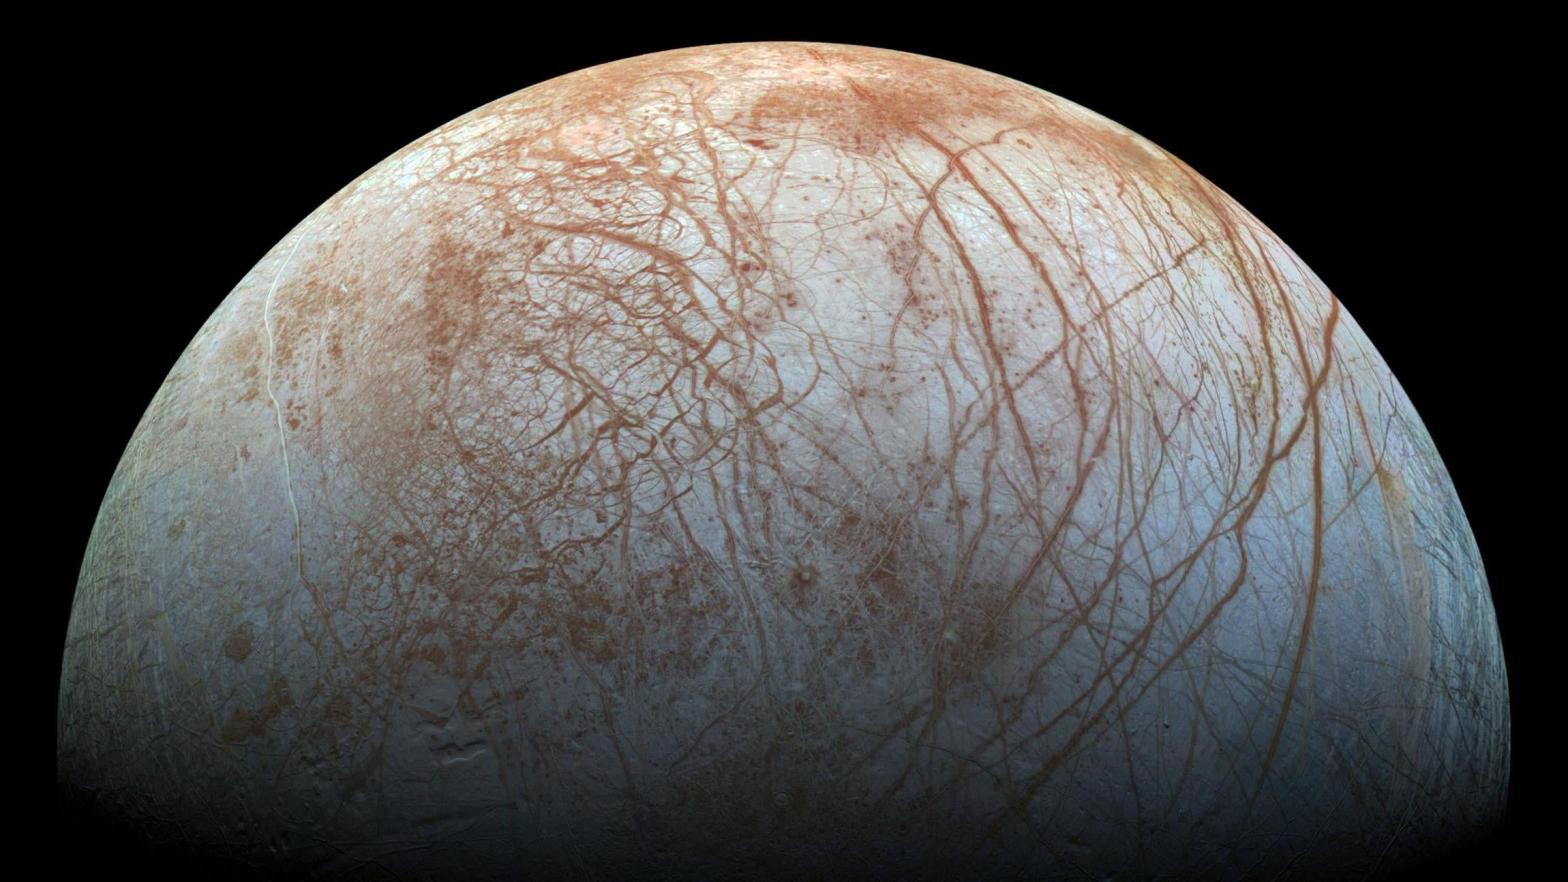 Europa.  (Image: NASA/JPL-Caltech/SETI Institute)